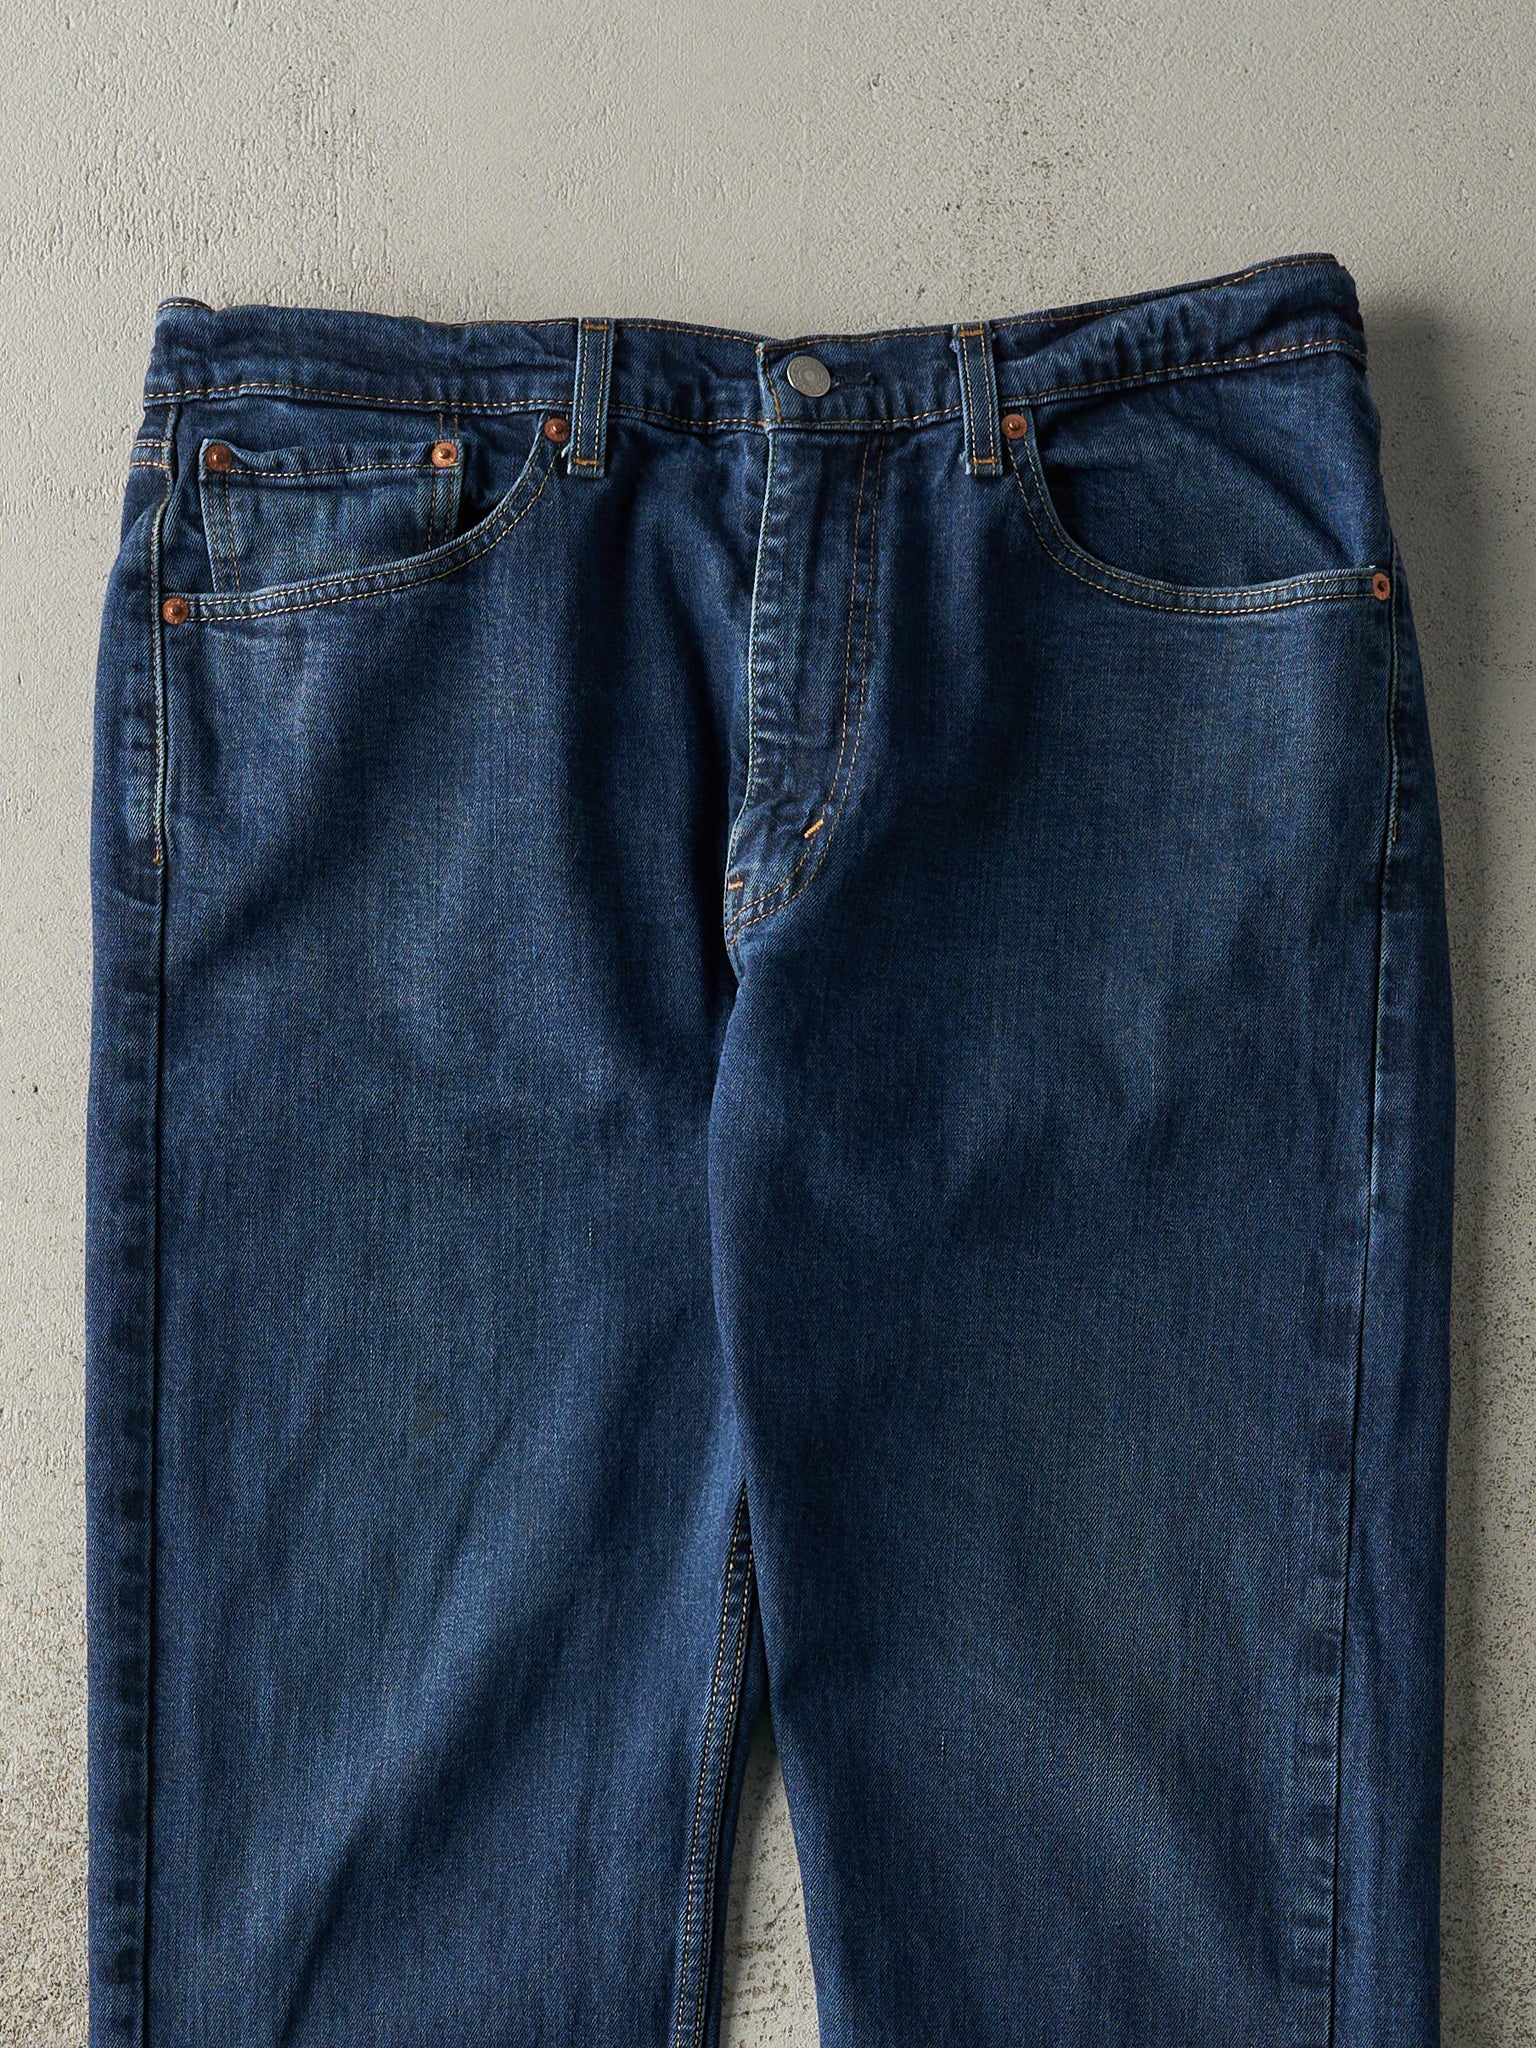 Vintage Y2K Dark Wash Levi's 505 Jeans (35.5x29)